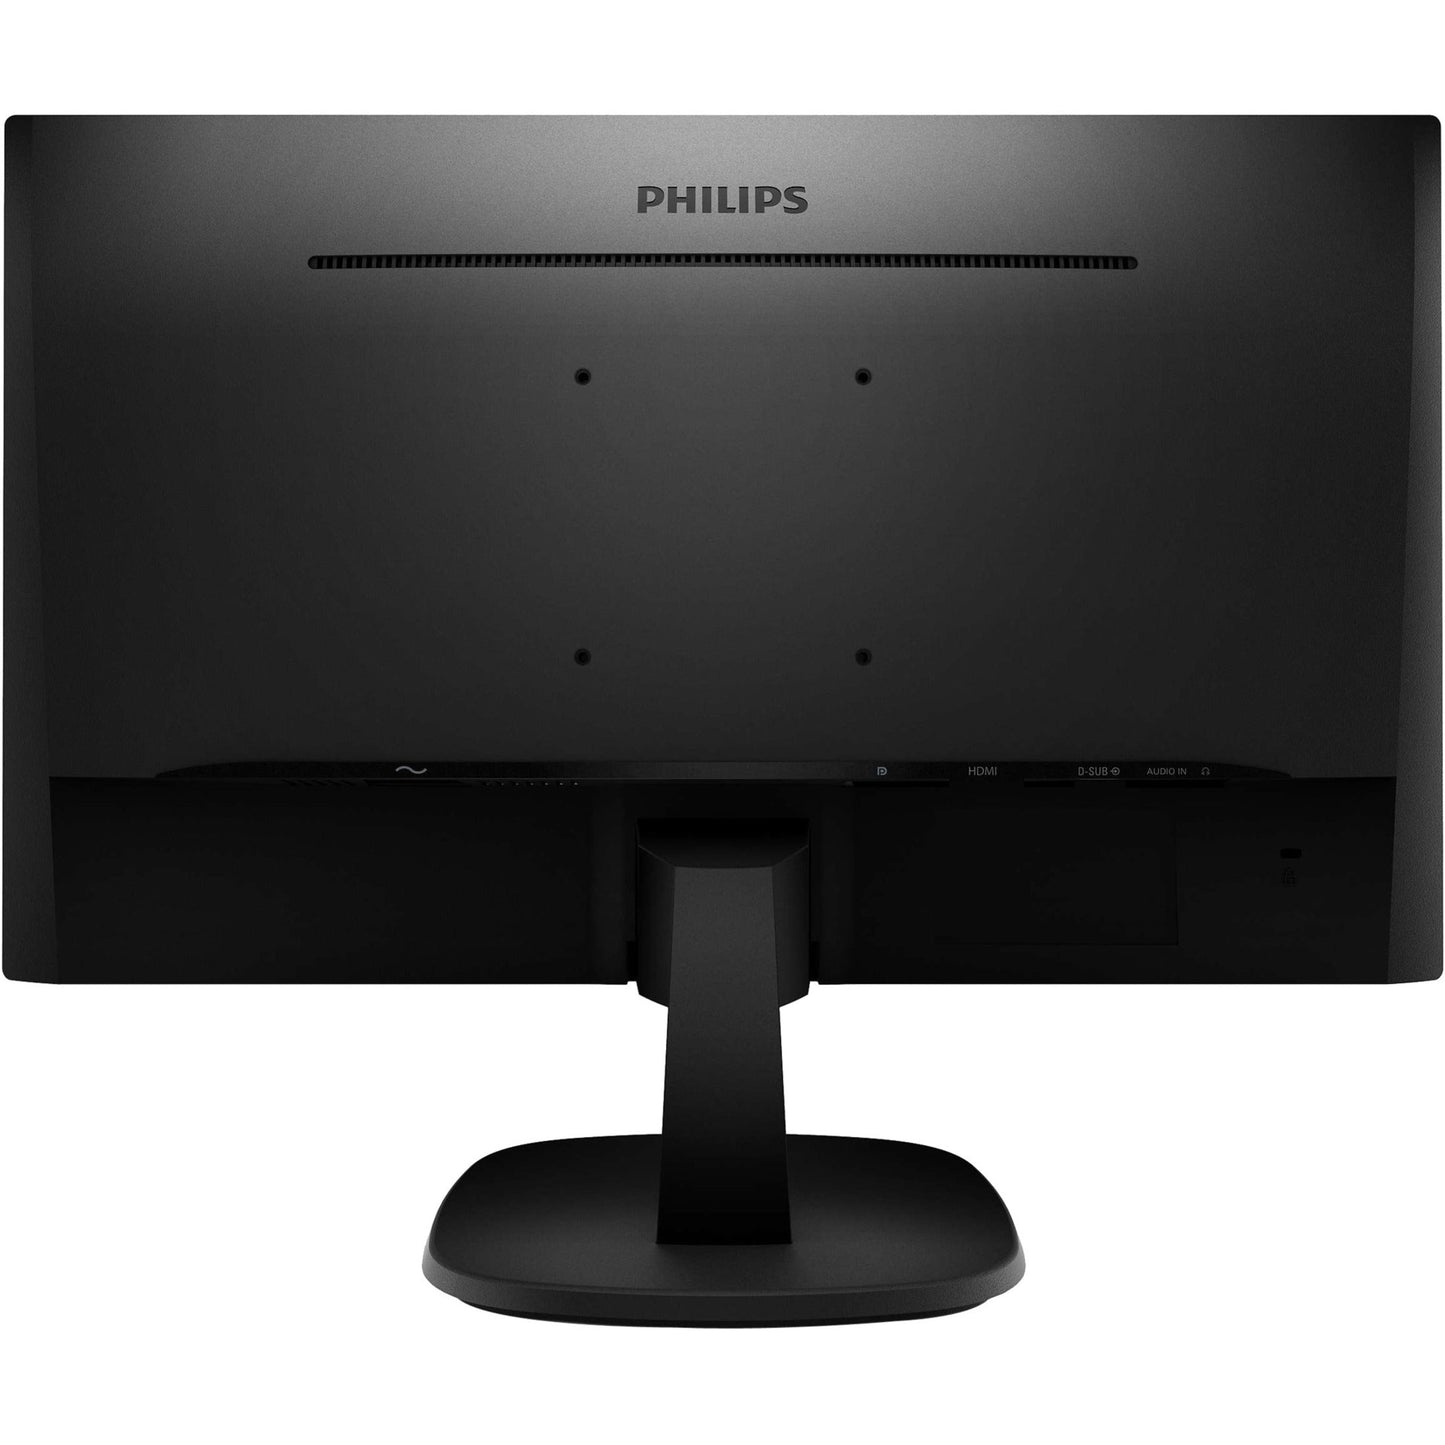 Philips V-line 243V7QJAB 23.8" Full HD LCD Monitor - 16:9 - Textured Black